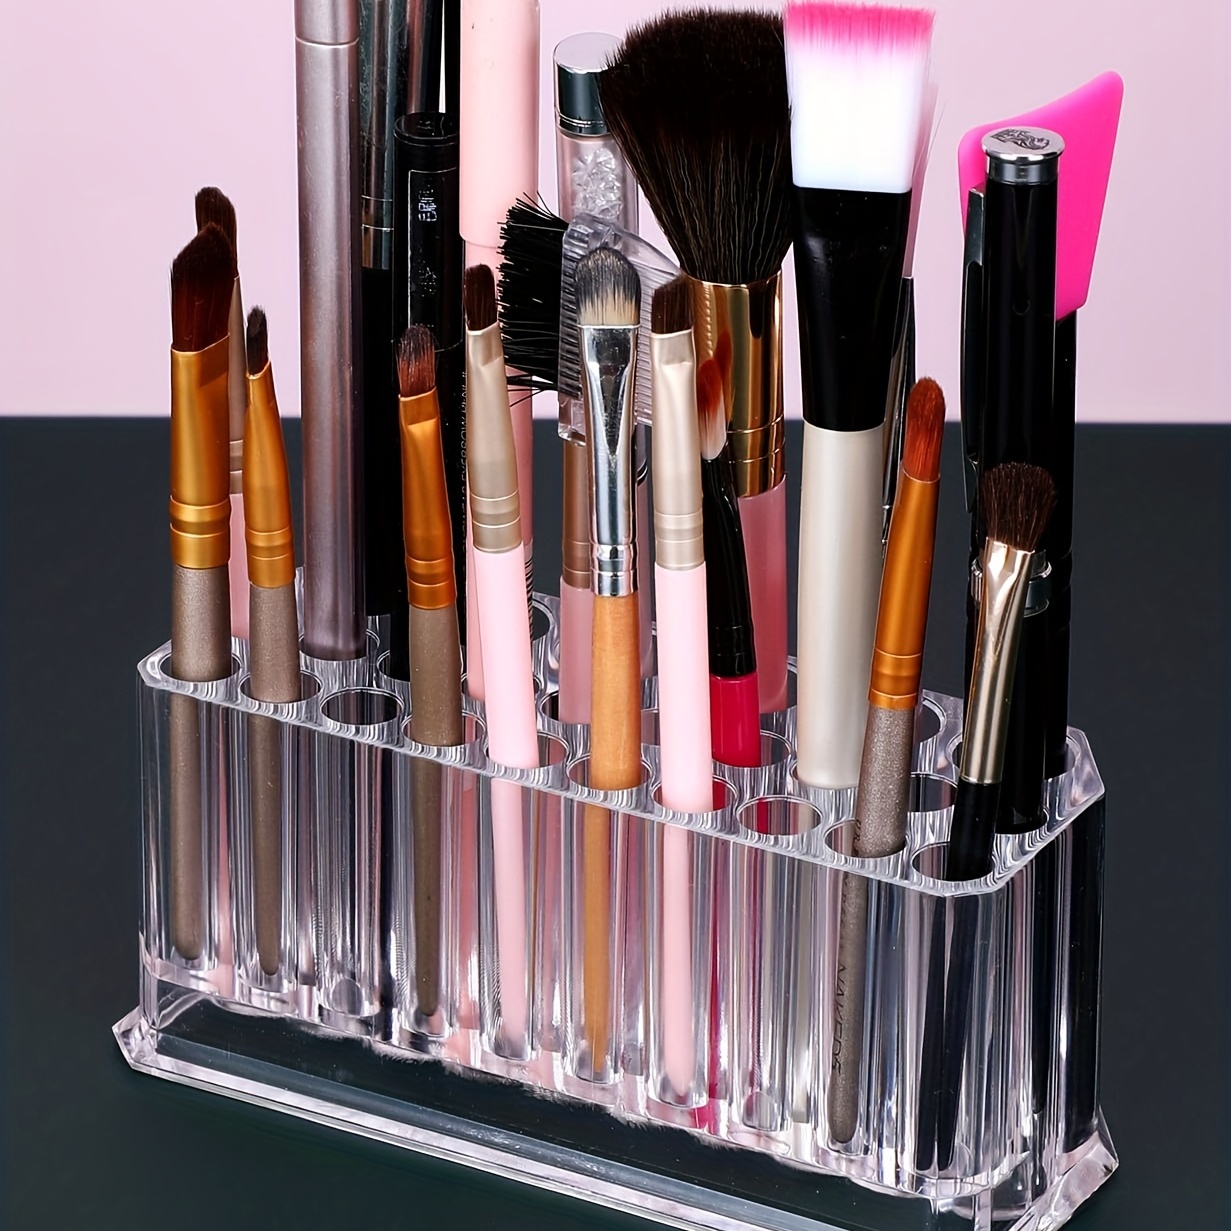 Acrylic Makeup Brush Holder